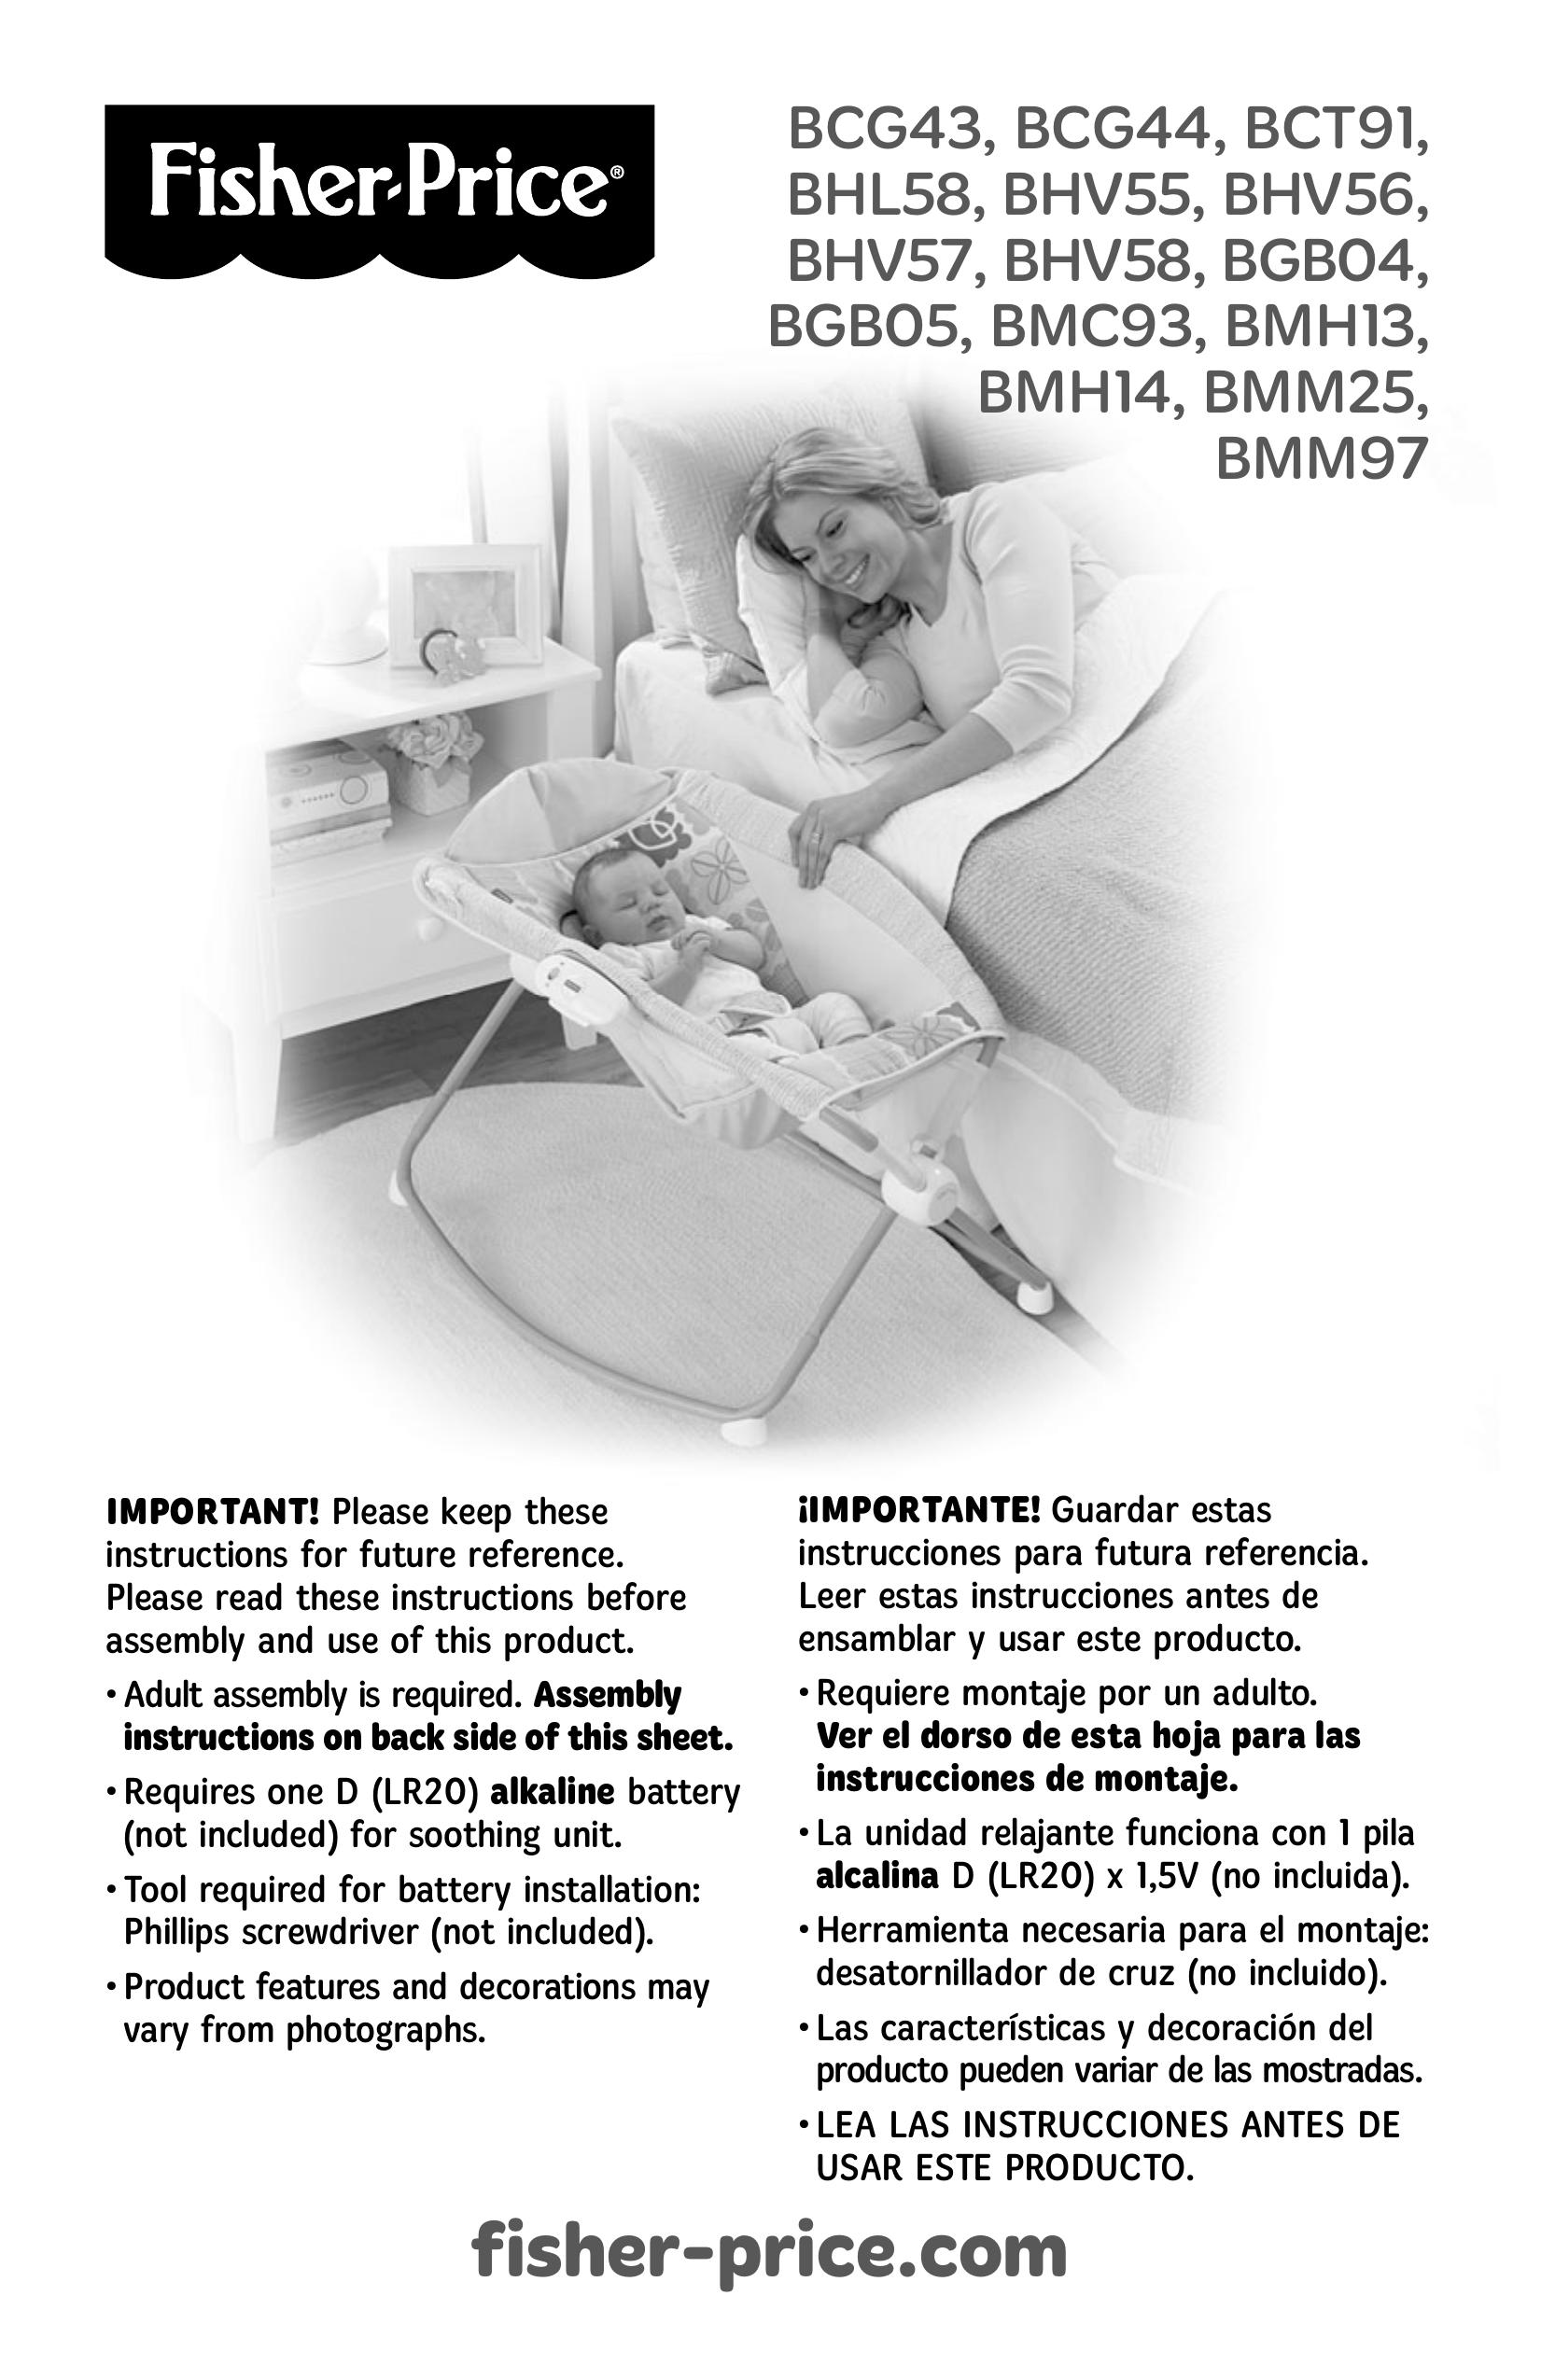 Fisher-Price BHV58 Sleep Apnea Machine User Manual